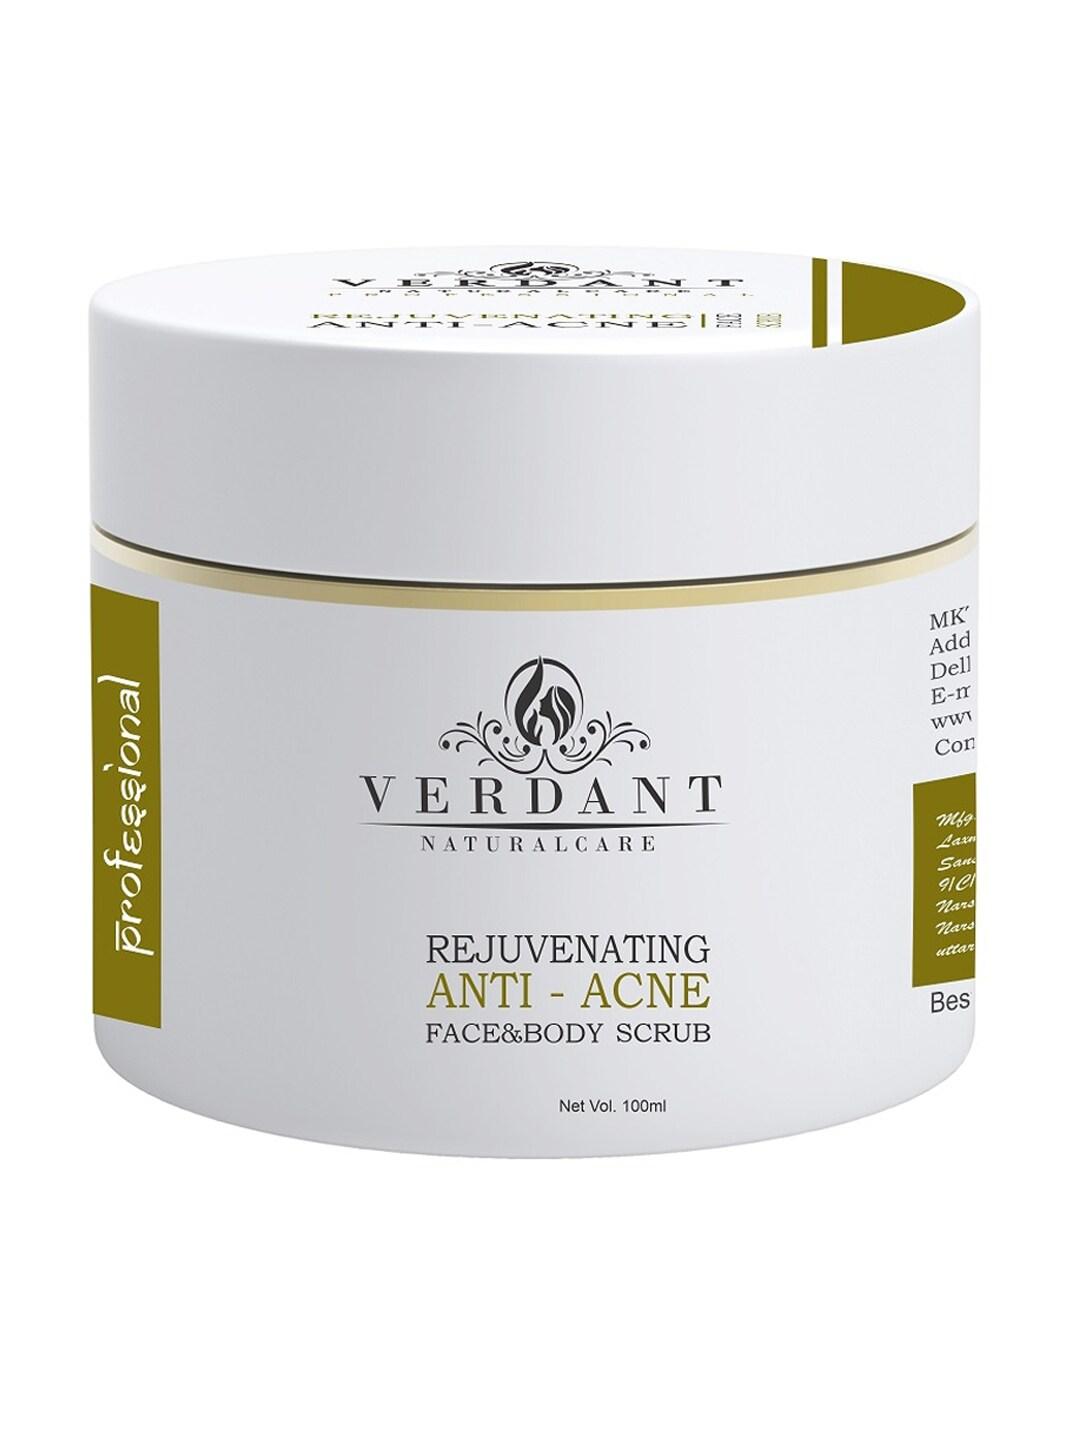 Verdant Natural Care Rejuvenating Anti-Acne Face & Body Scrub 100 ml